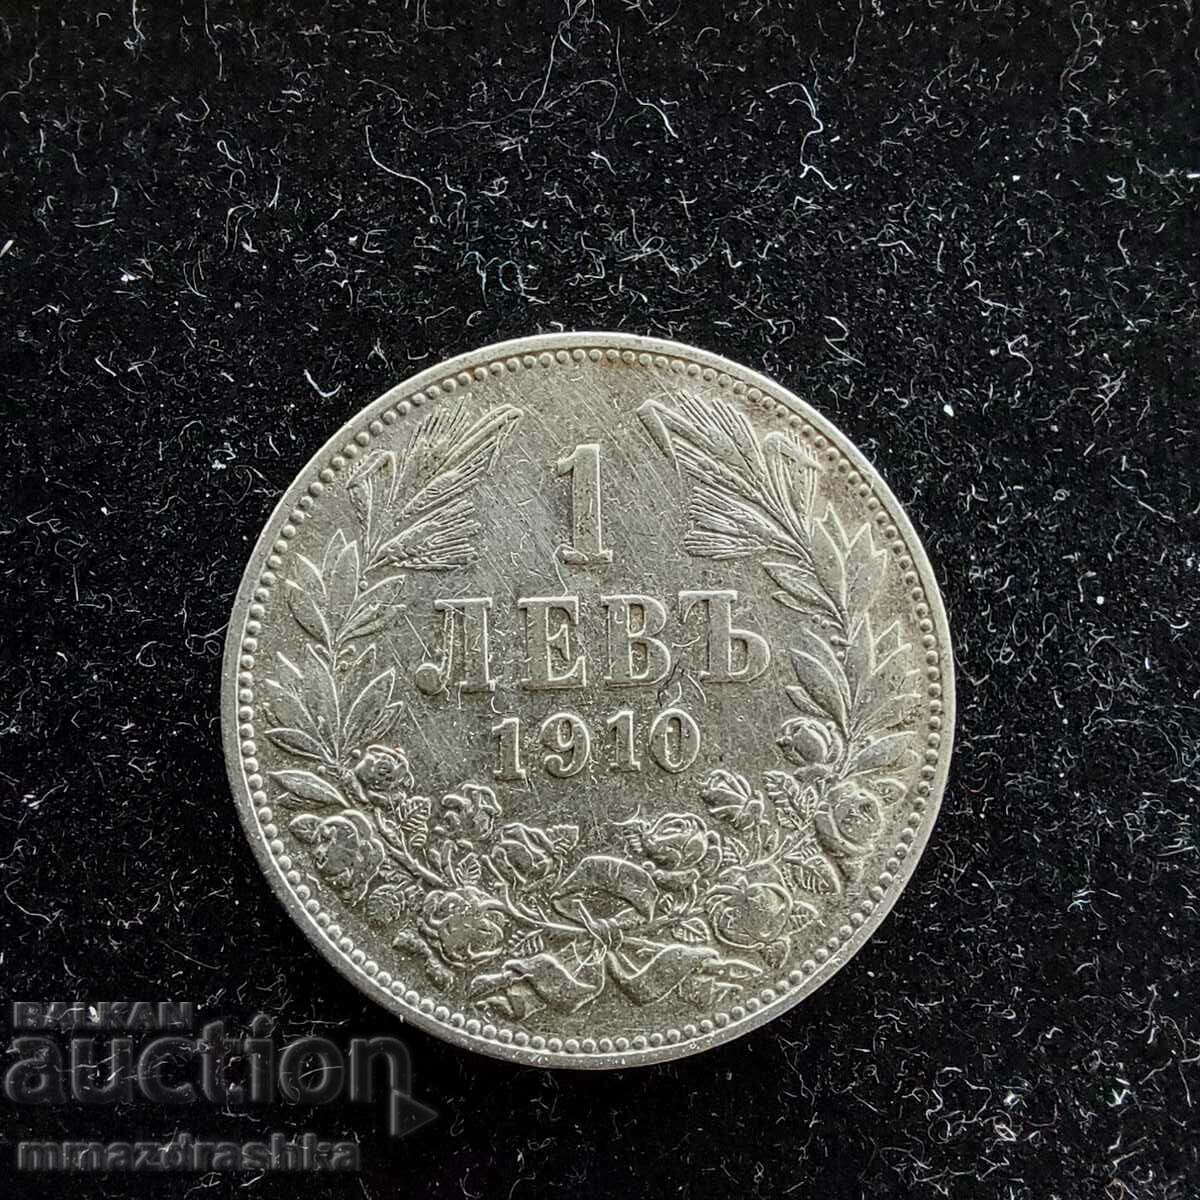 1 lev, anii 1910, argint